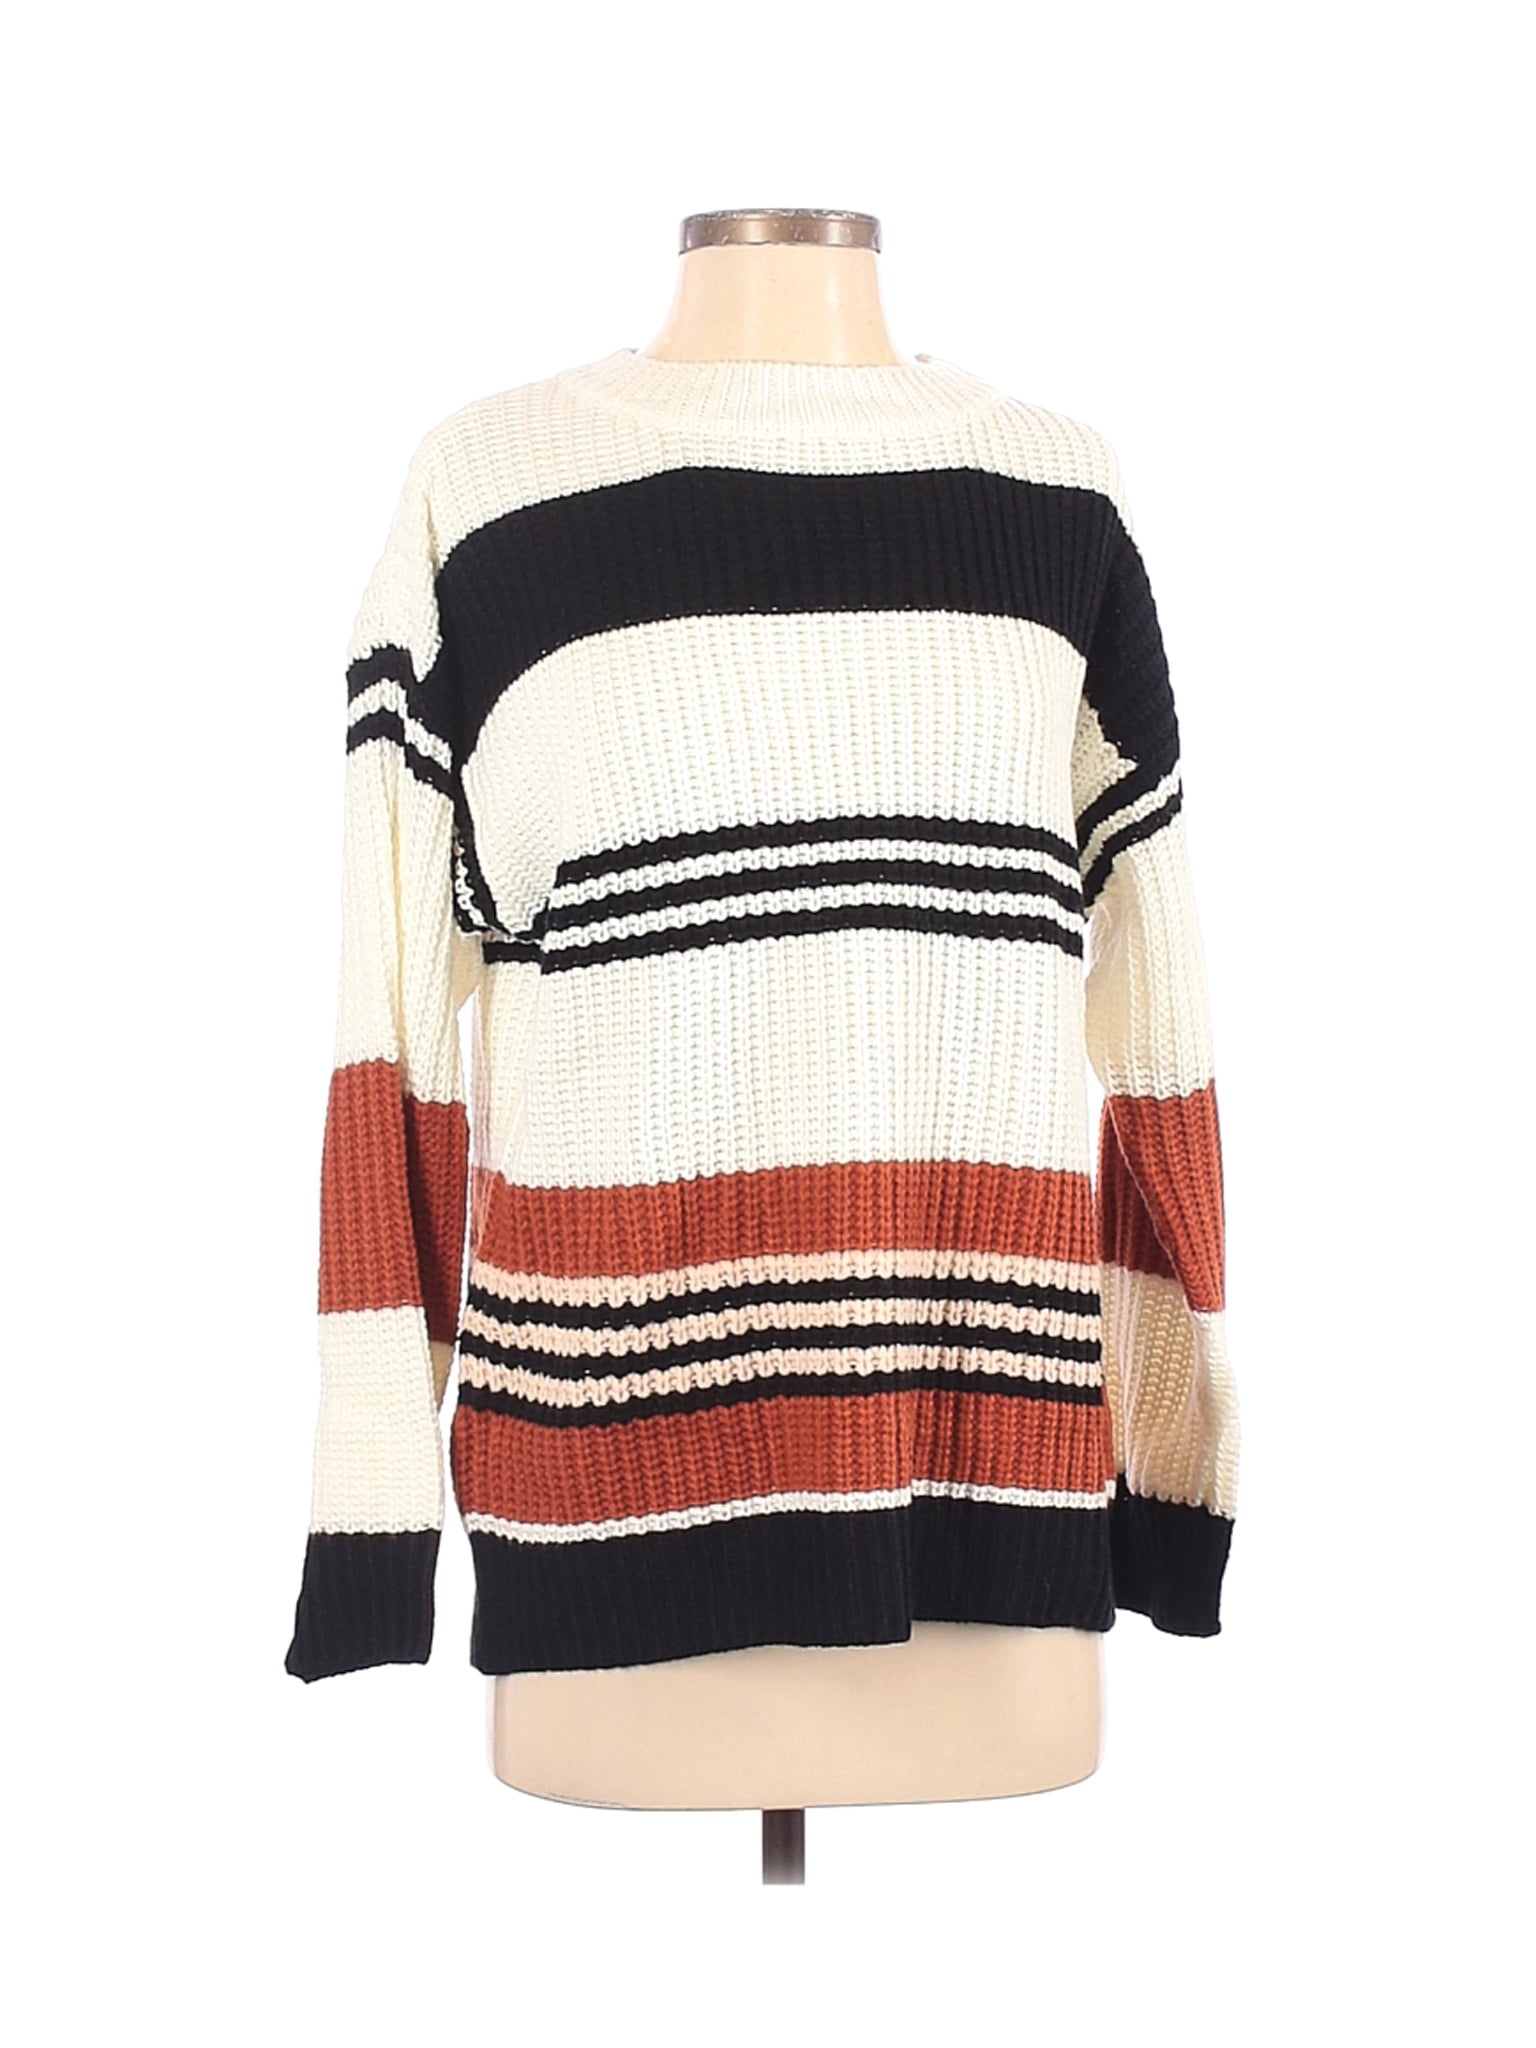 Zesica - Pre-Owned Zesica Women's Size S Pullover Sweater - Walmart.com ...